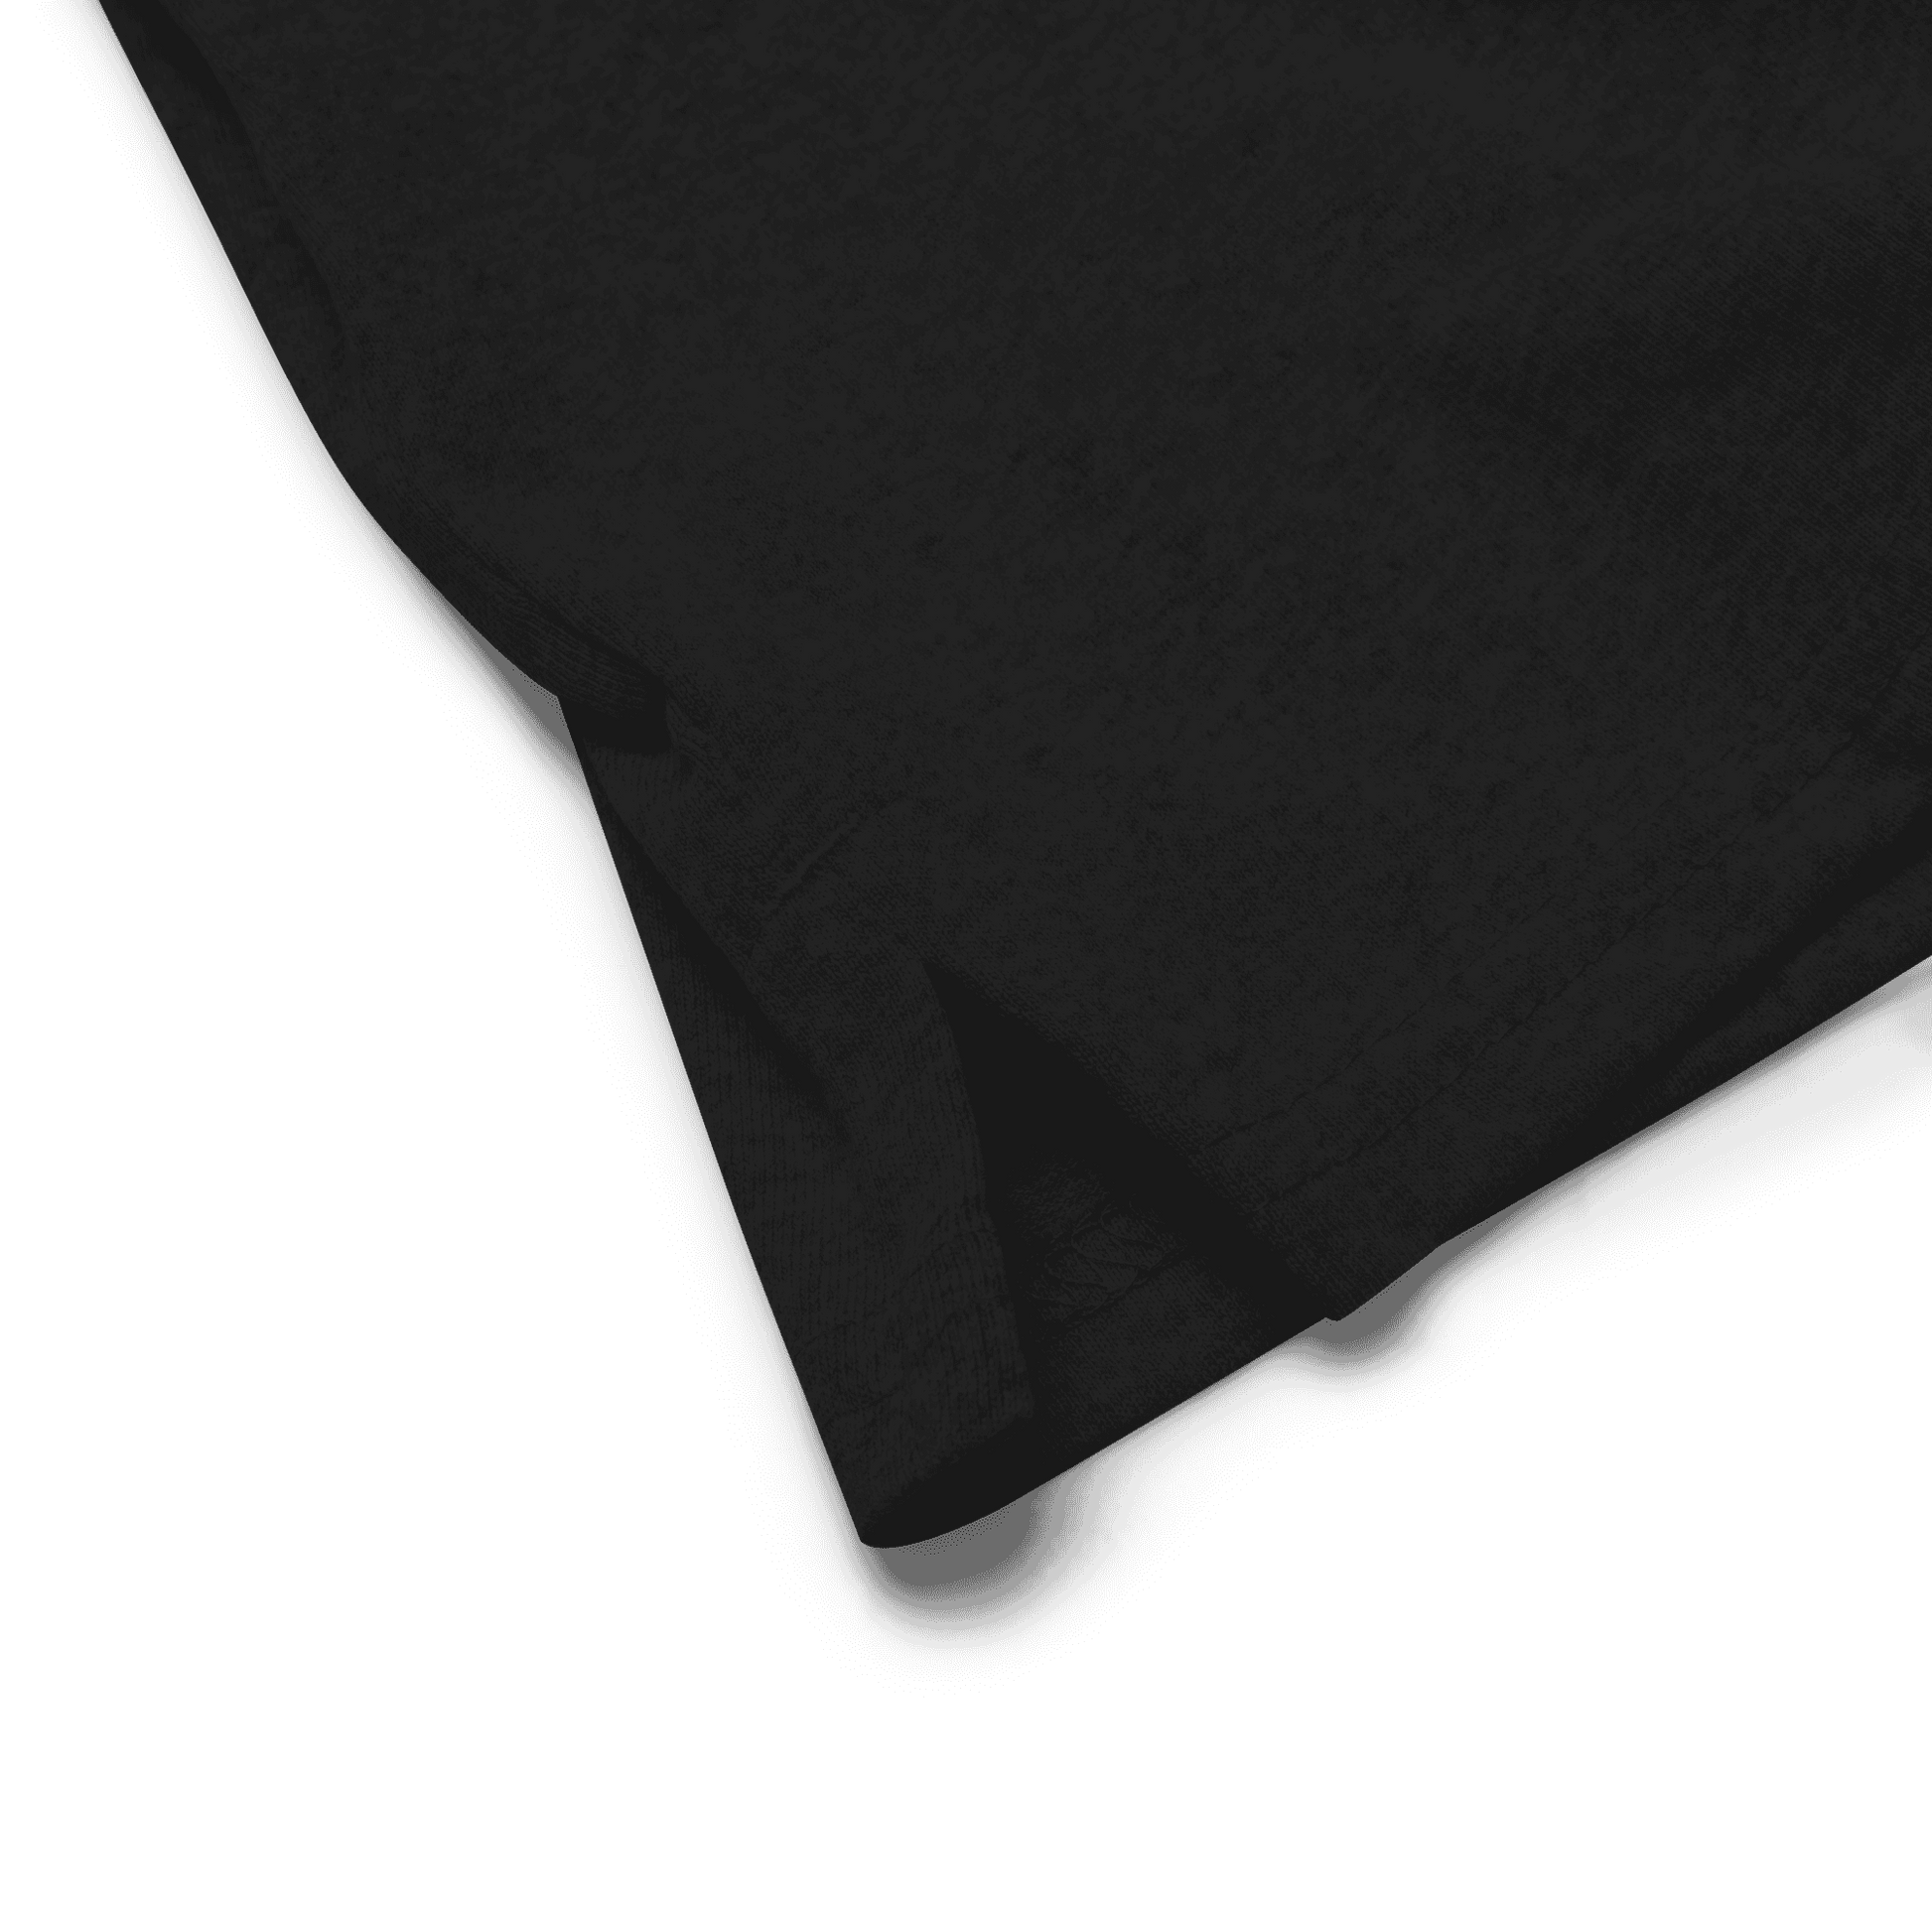 Brad Cecil | Player Patch V-neck T-shirt - Clutch - Clothing